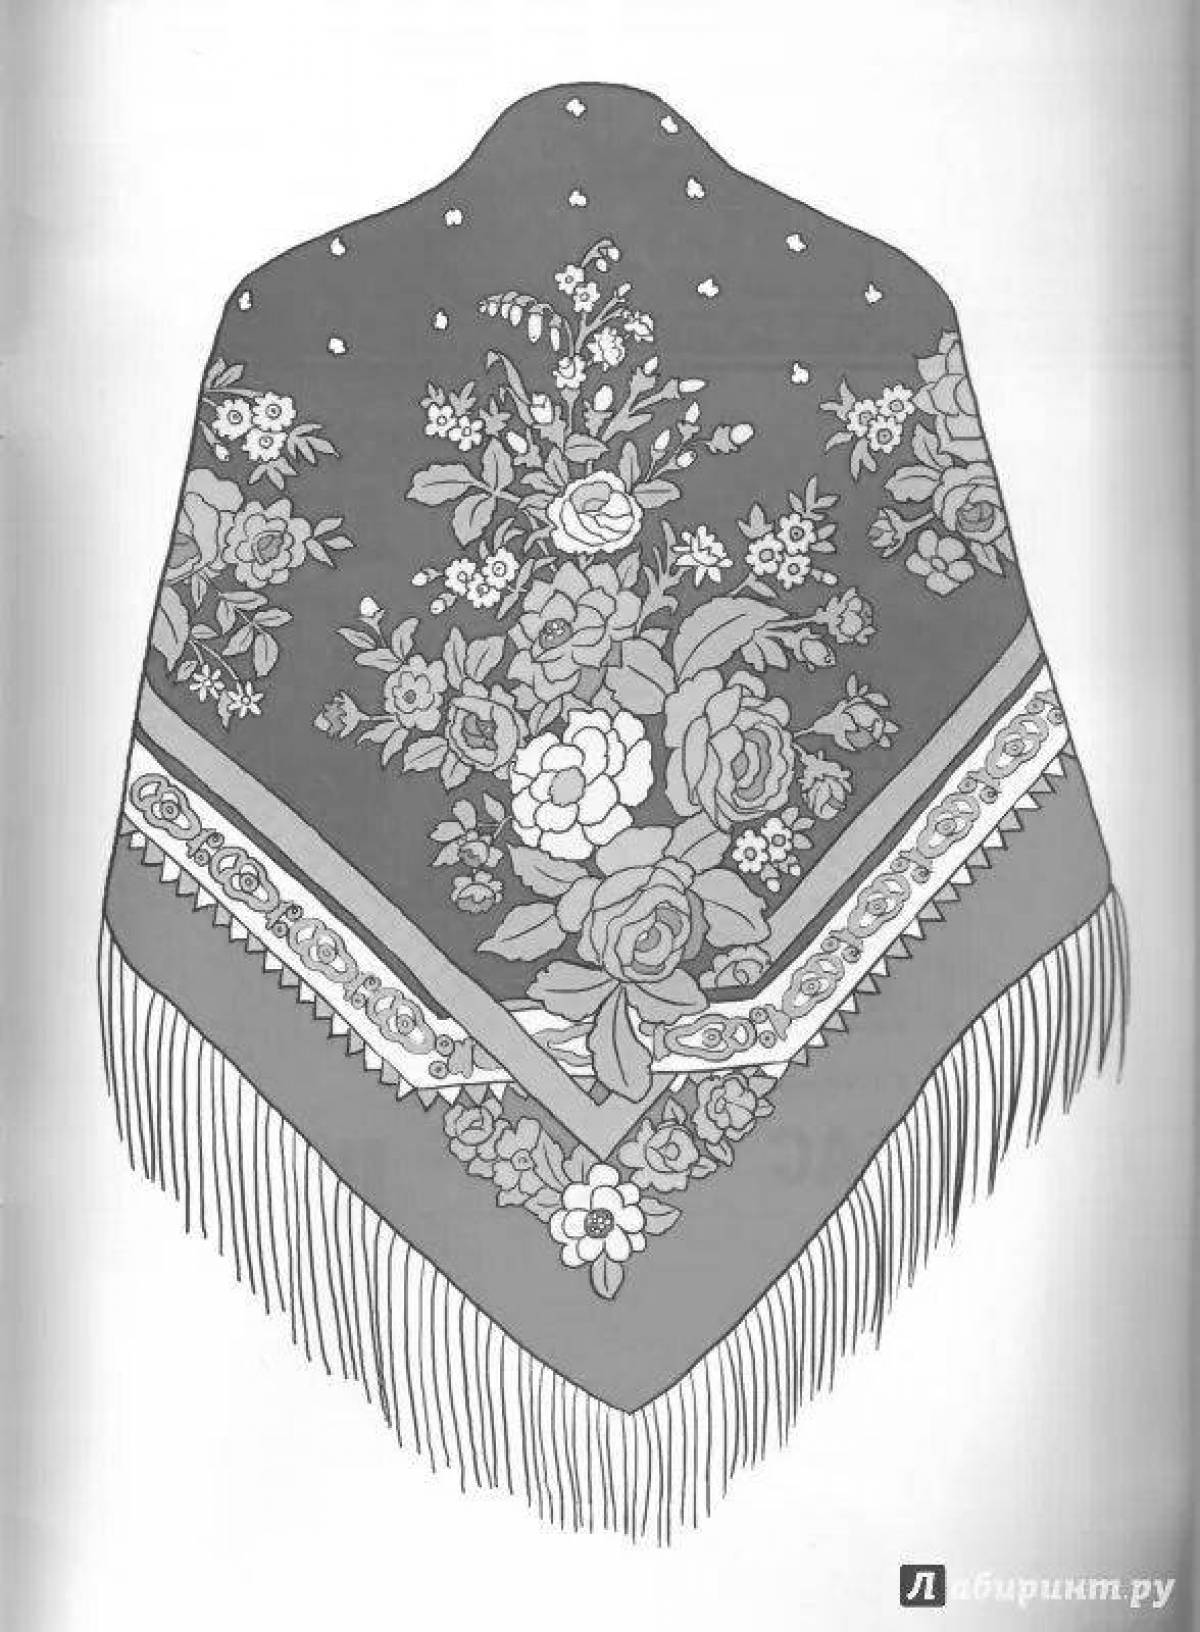 Dazzling pavlovoposad shawls